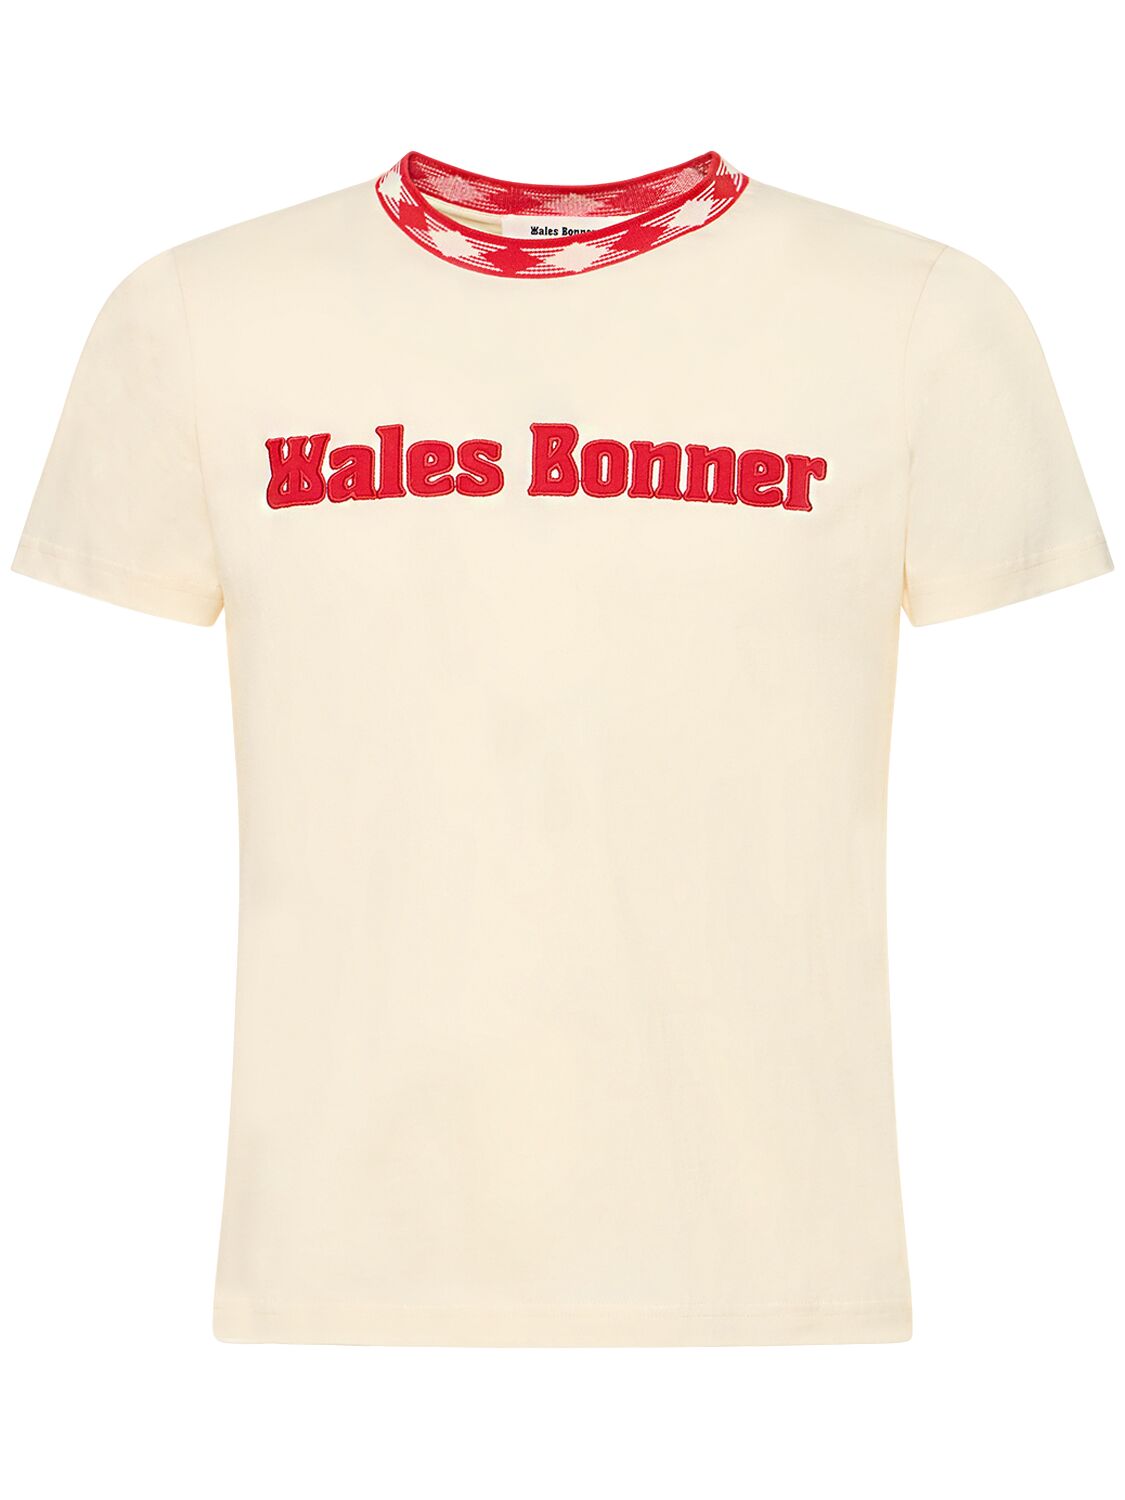 Image of Original Wales Bonner Logo T-shirt